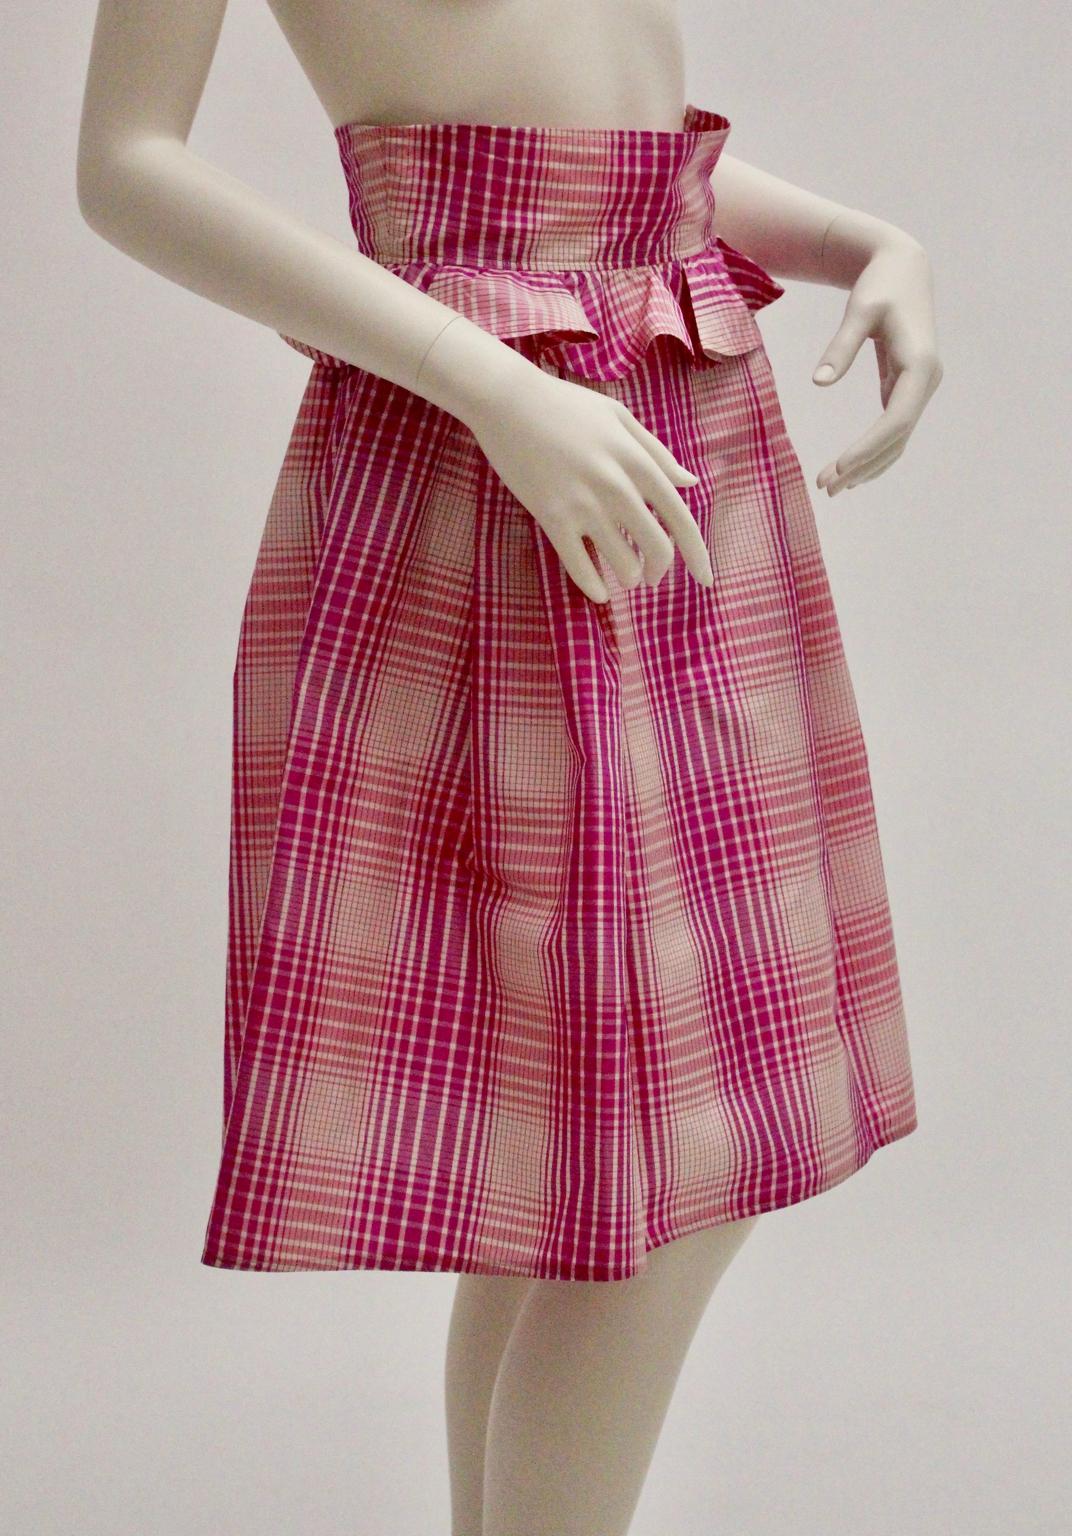 Silk Pink White Checker Vintage High Waist Skirt by Emanuel Ungaro 1980s Paris For Sale 6